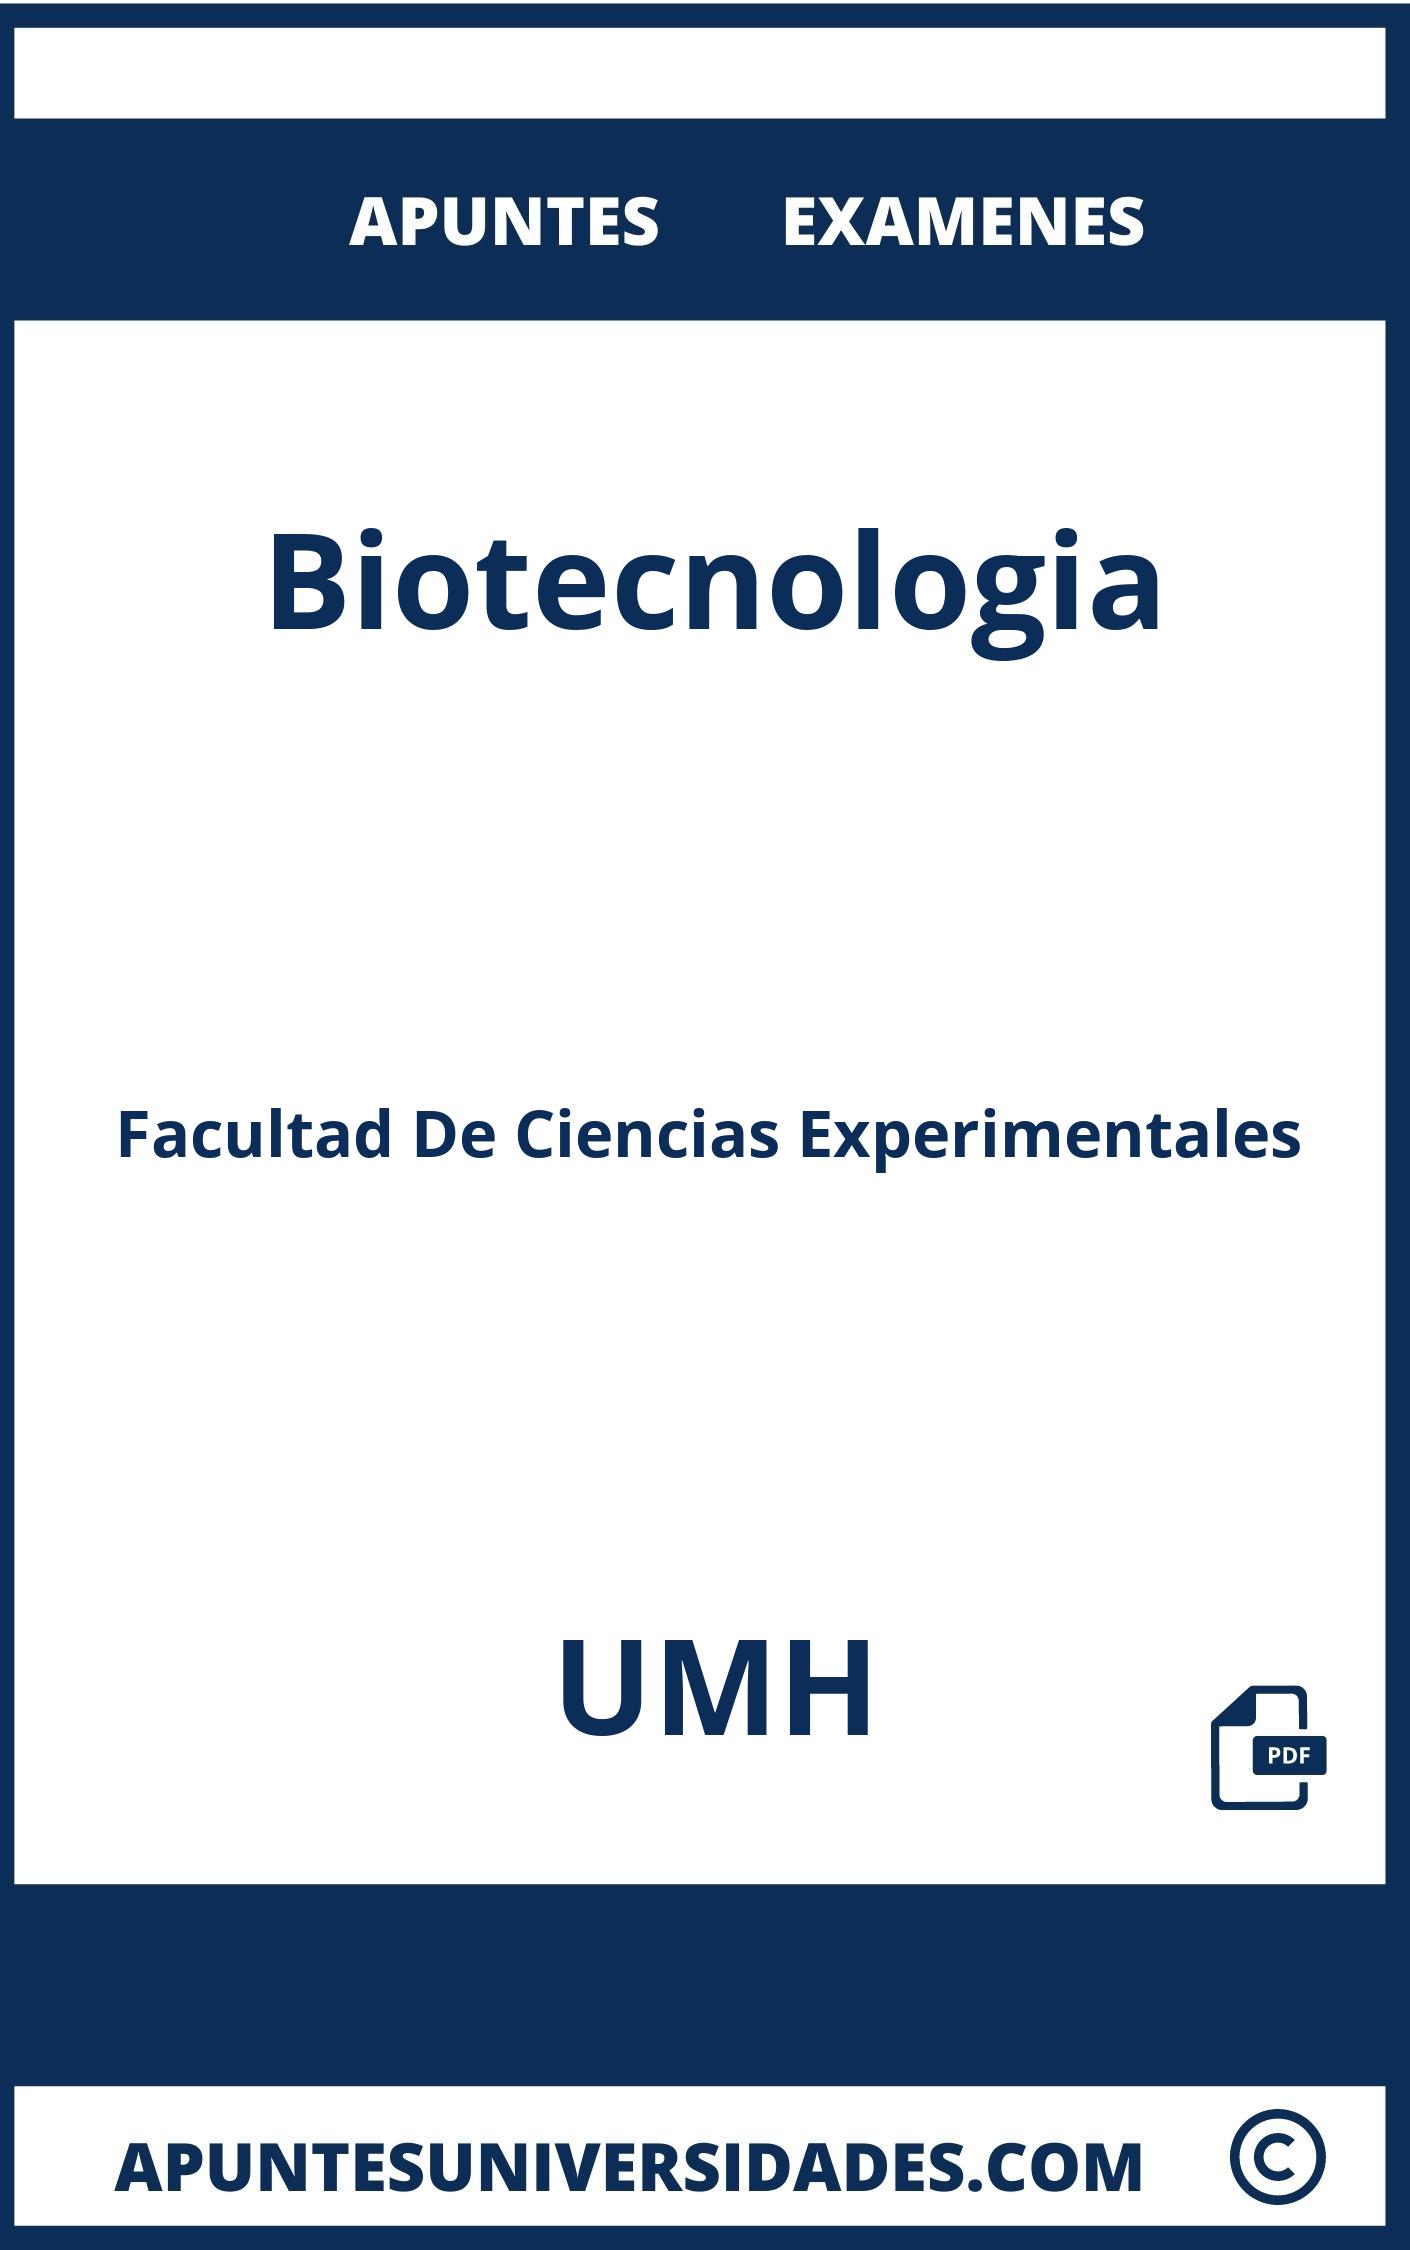 Examenes y Apuntes Biotecnologia UMH